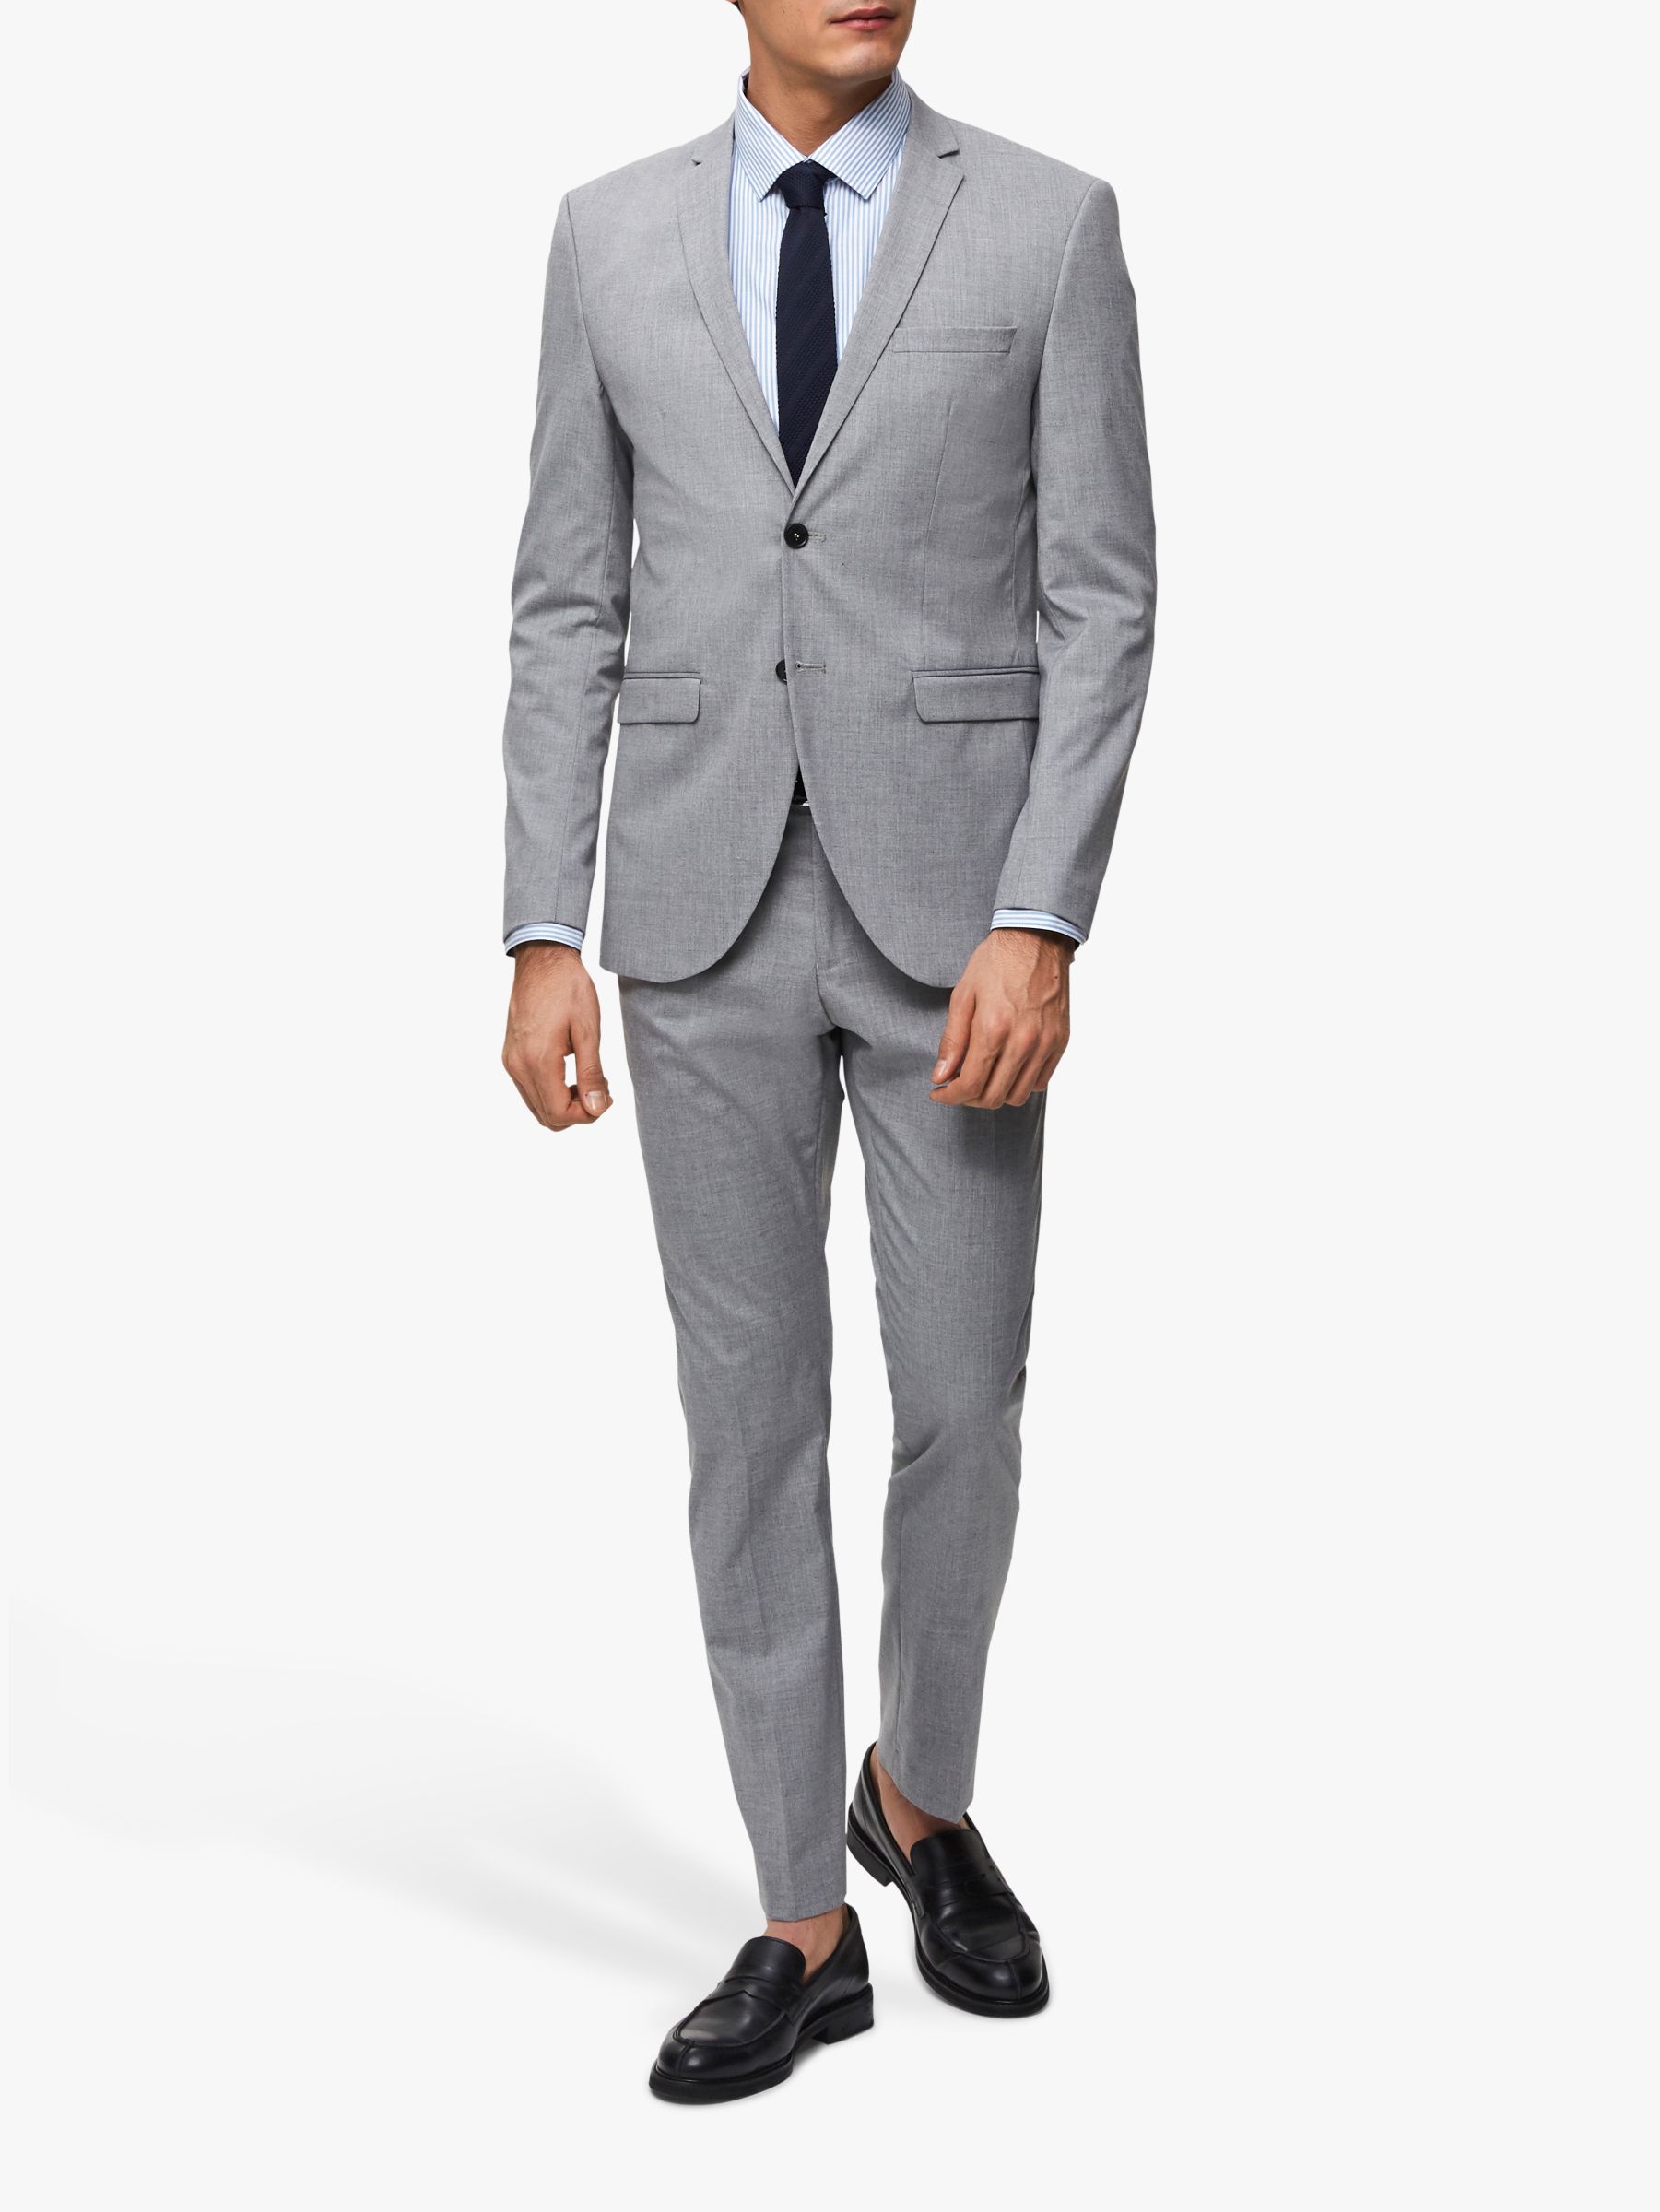 SELECTED HOMME Slim Fit Suit Jacket, Light Grey at John Lewis & Partners